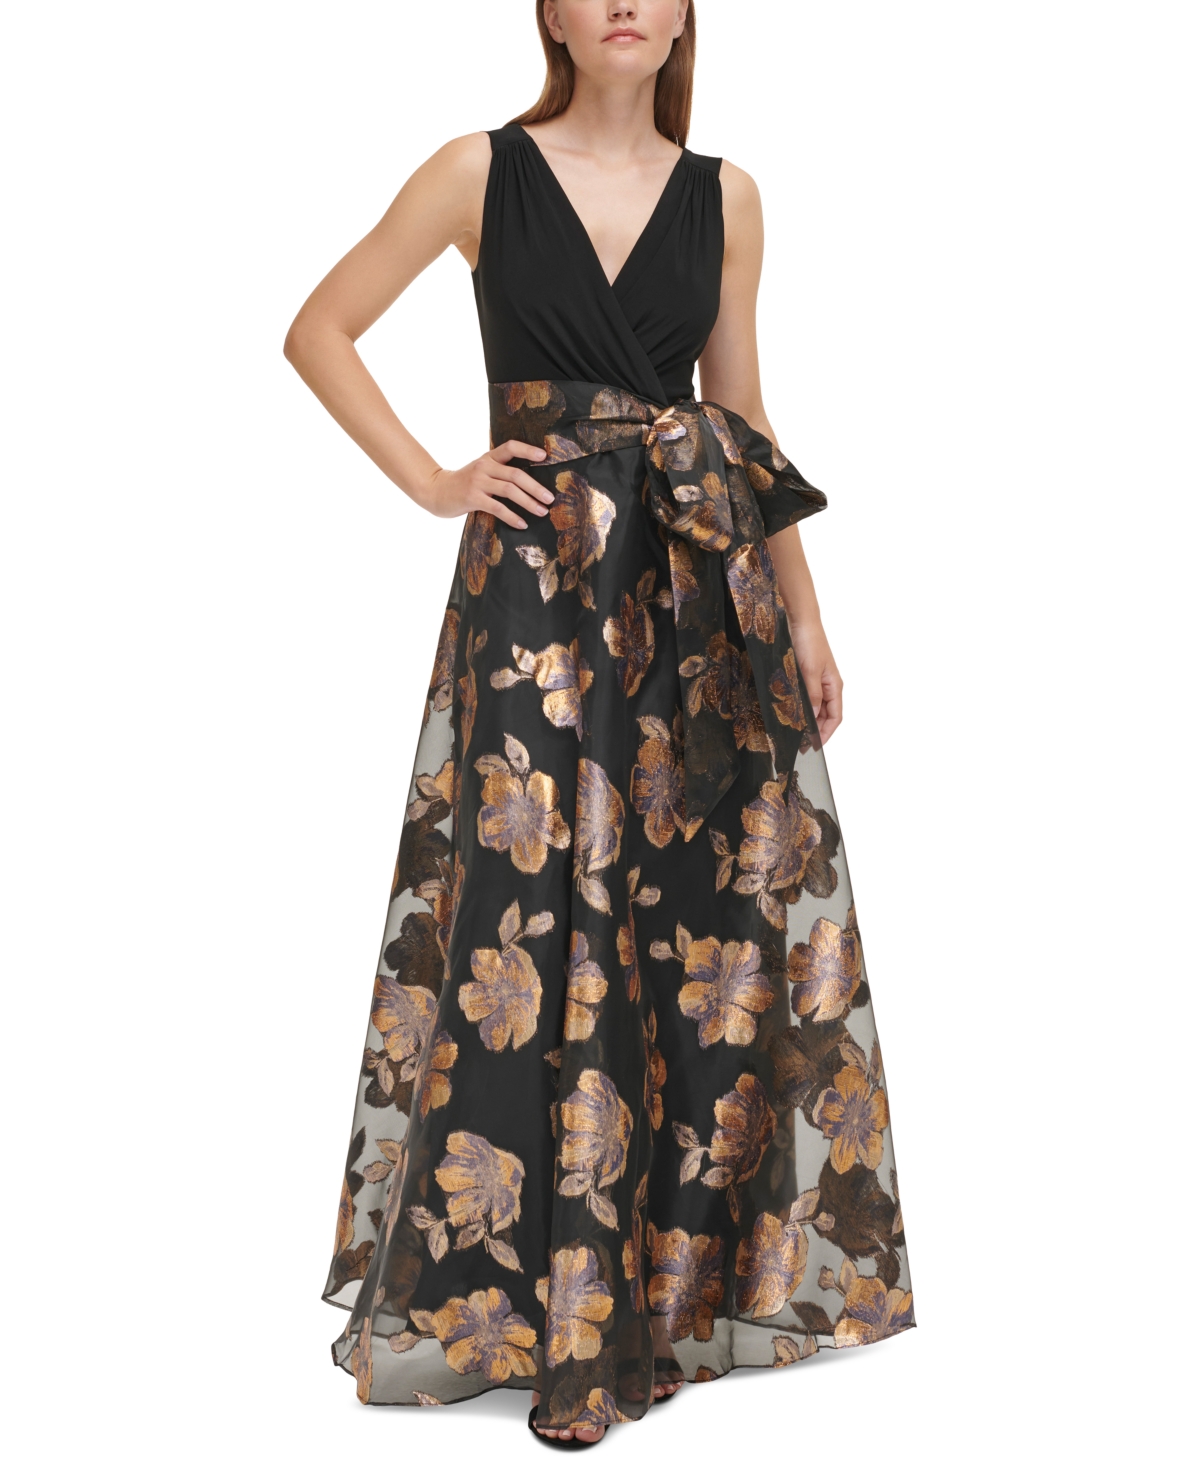 1940s Formal Dresses, Evening Gowns History Eliza J Petite Sleeveless Metallic Organza Ballgown - Black Gold $248.00 AT vintagedancer.com